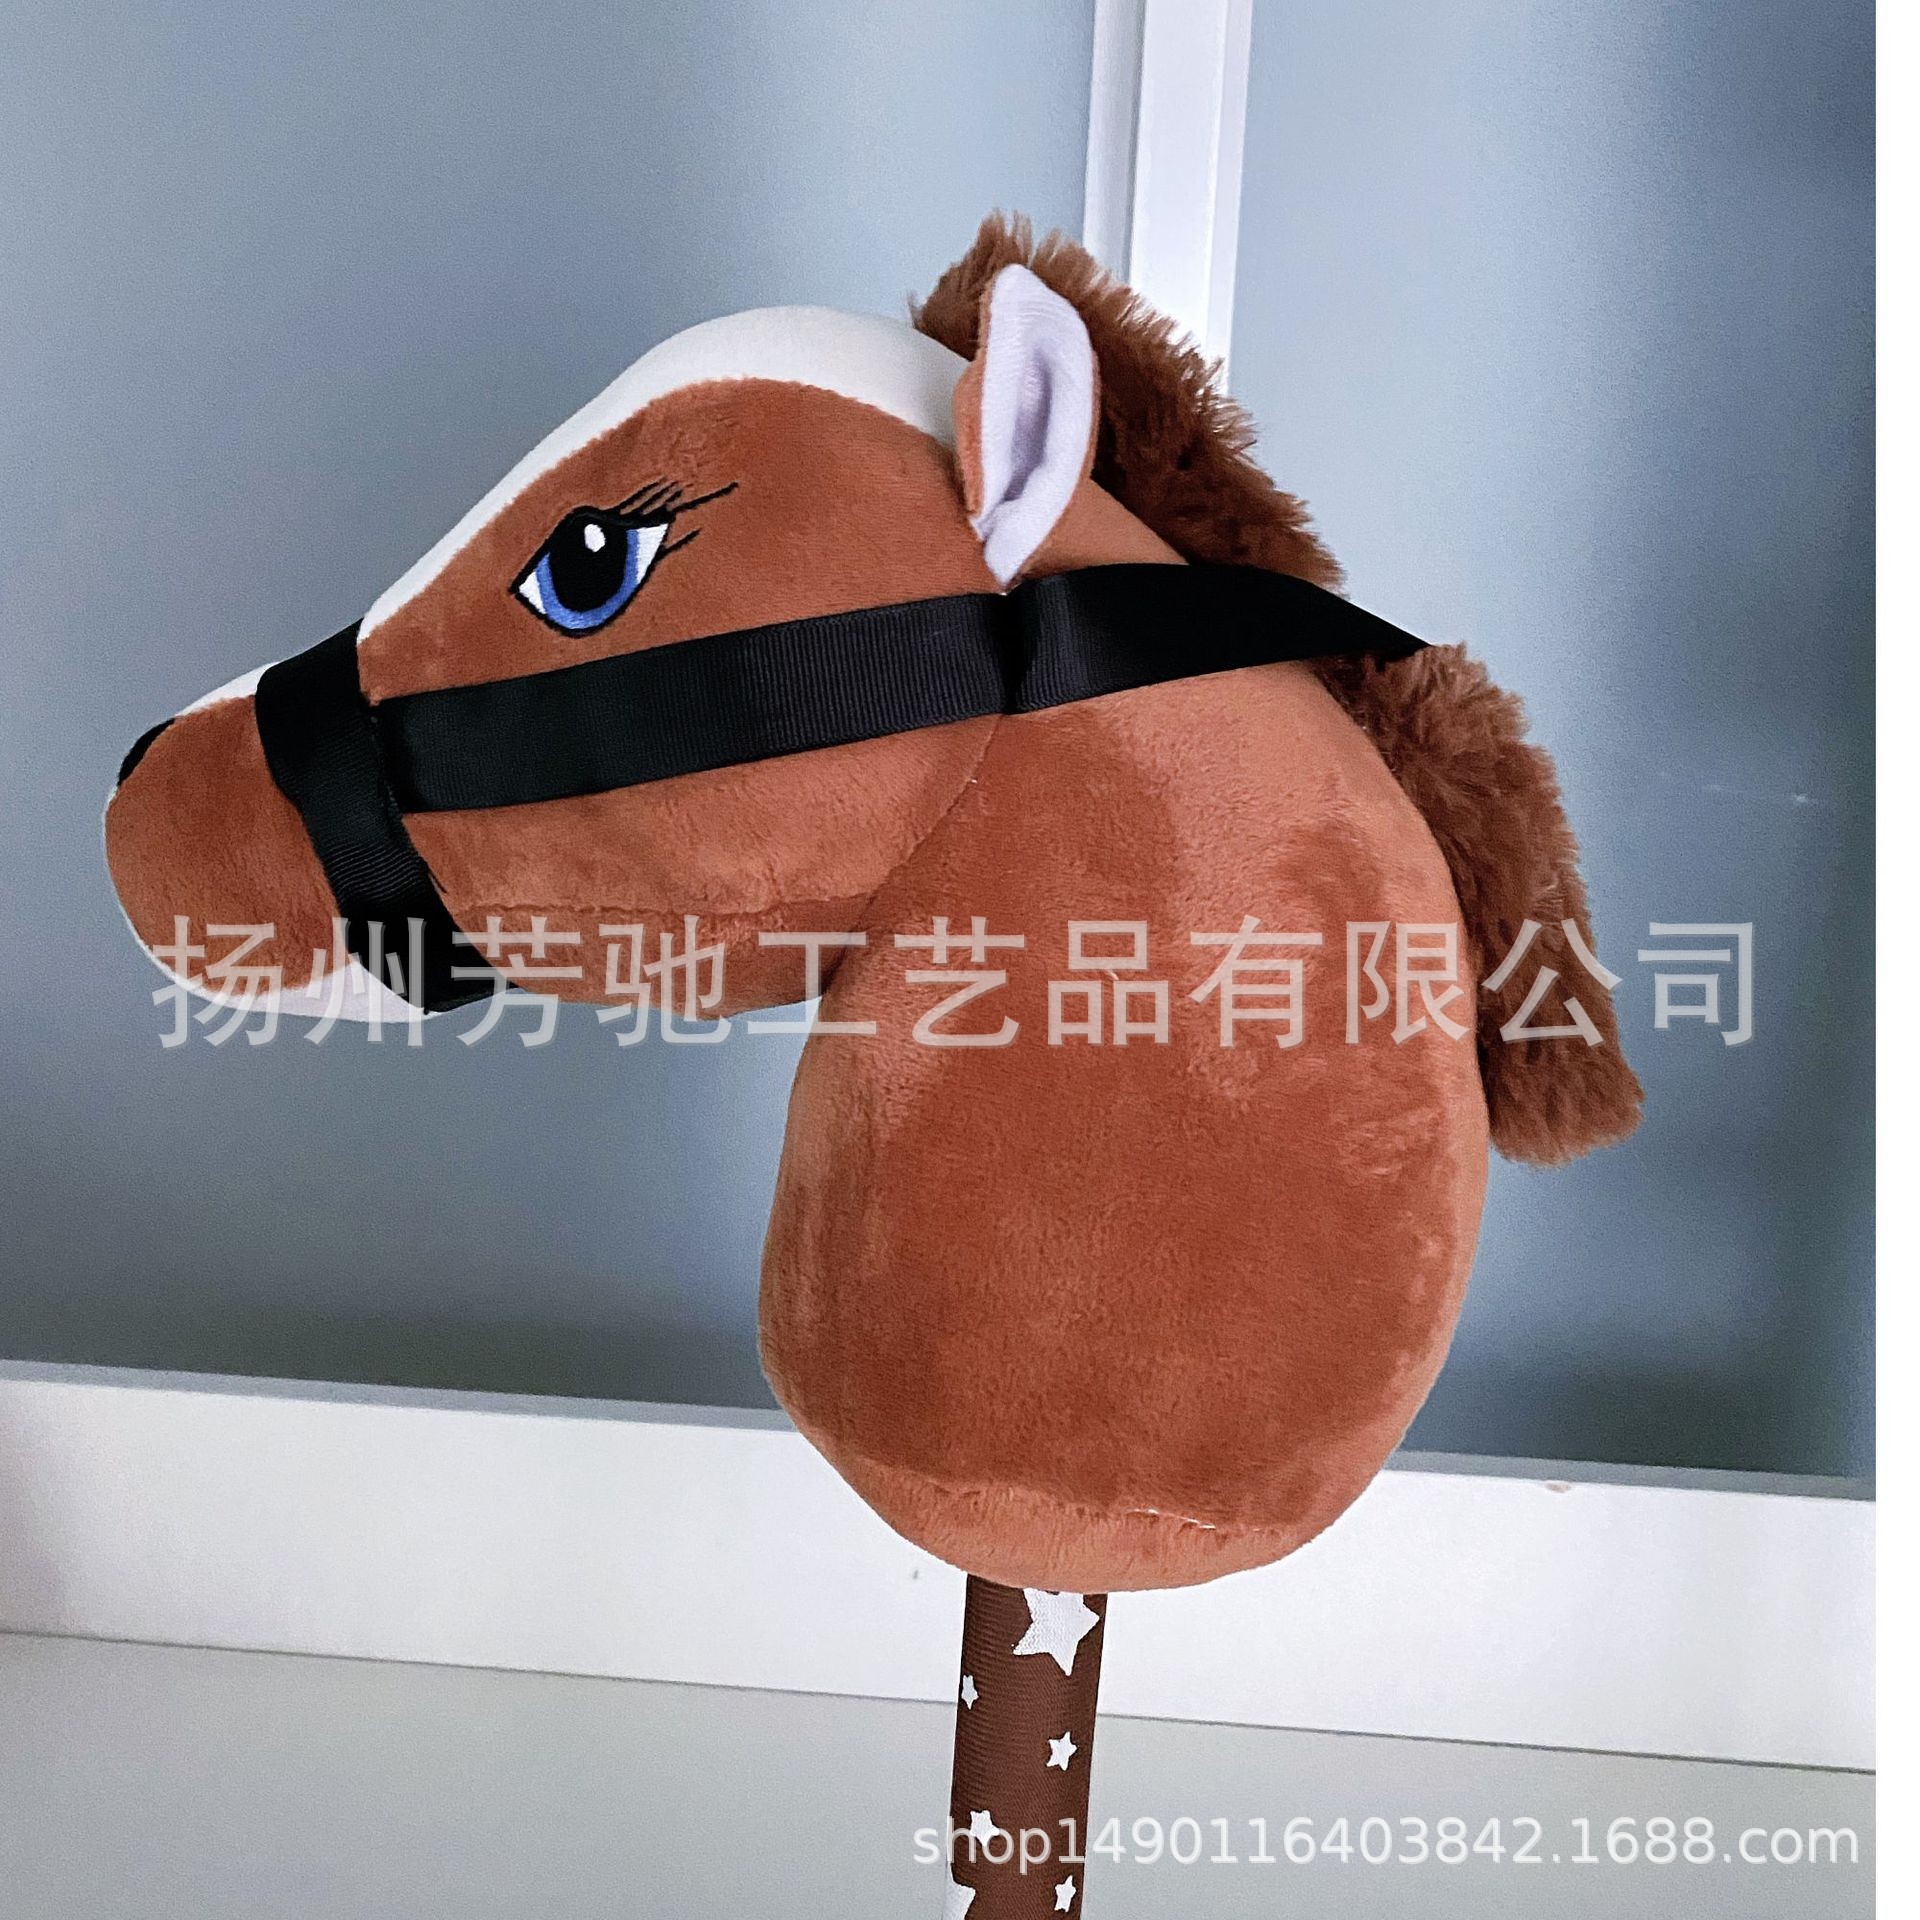 Unicorn Stick Horsehead Stick Plush Toy Factory Plush Toy Horse Head Stick